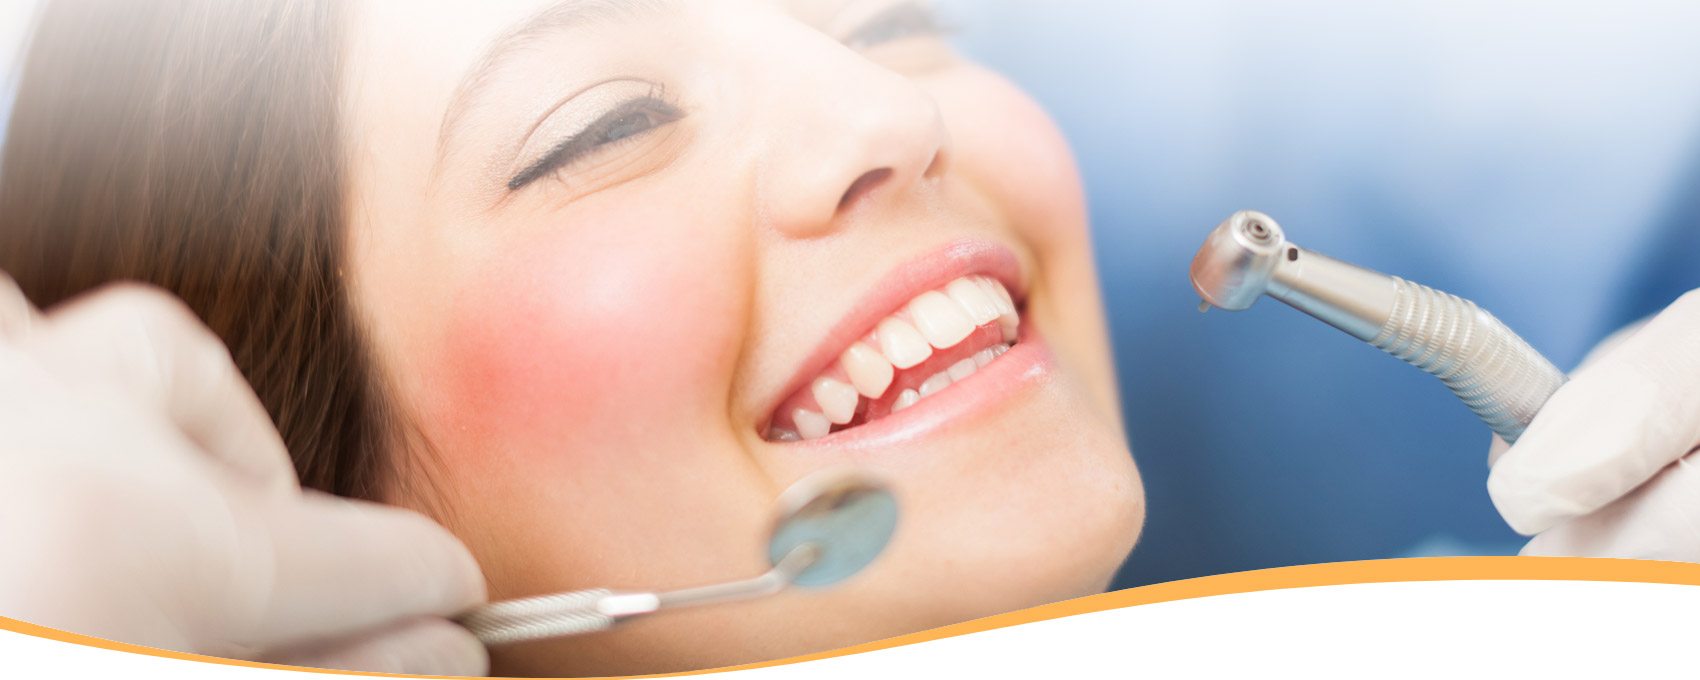 Teeth Cleaning & Dental Checkups - Natalie K. Provenzano DDS, Inc